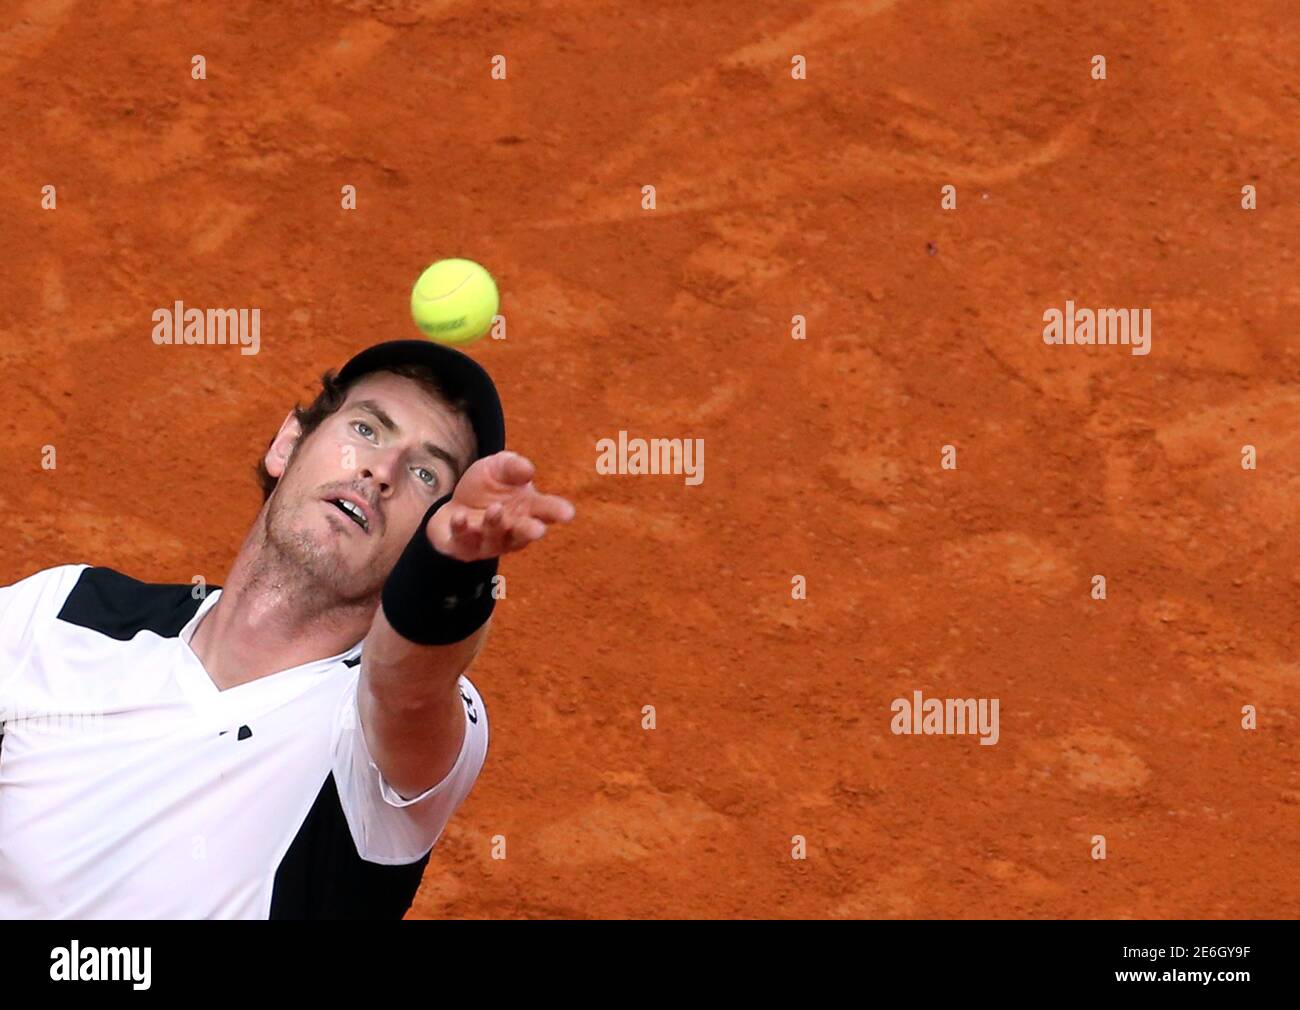 Tennis - Italy Open Men's Singles Final match - Novak Djokovic of Serbia v Andy Murray of Britain - Roma, Italia - 15/5/16 Murray serves. REUTERS/Alessandro Bianchi Foto Stock